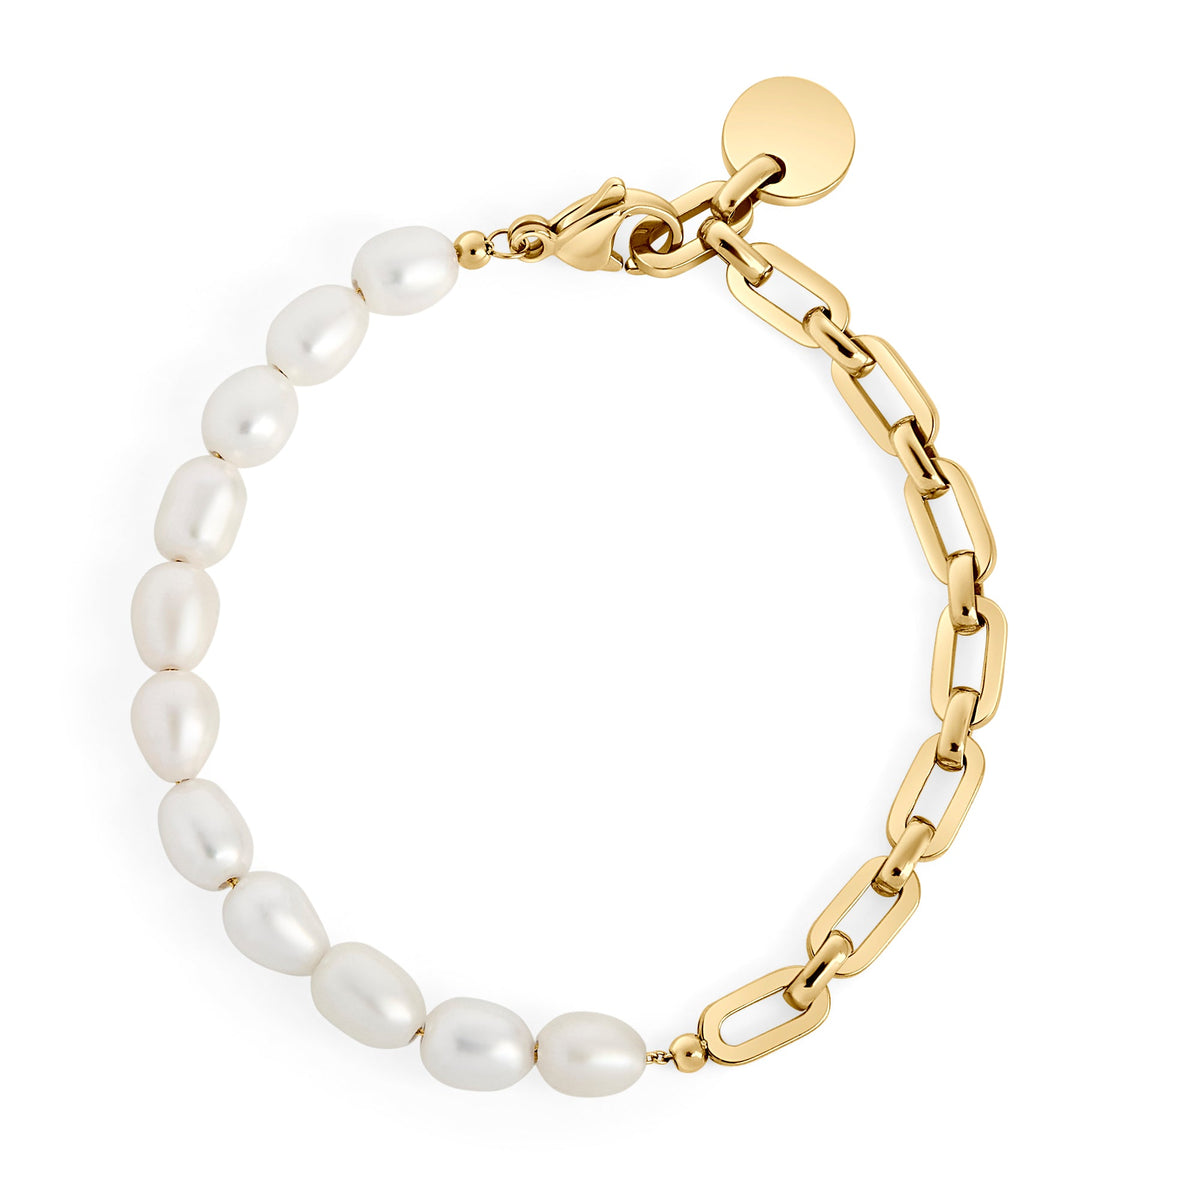 Gold Bracelet Half Links Half Real Pearls